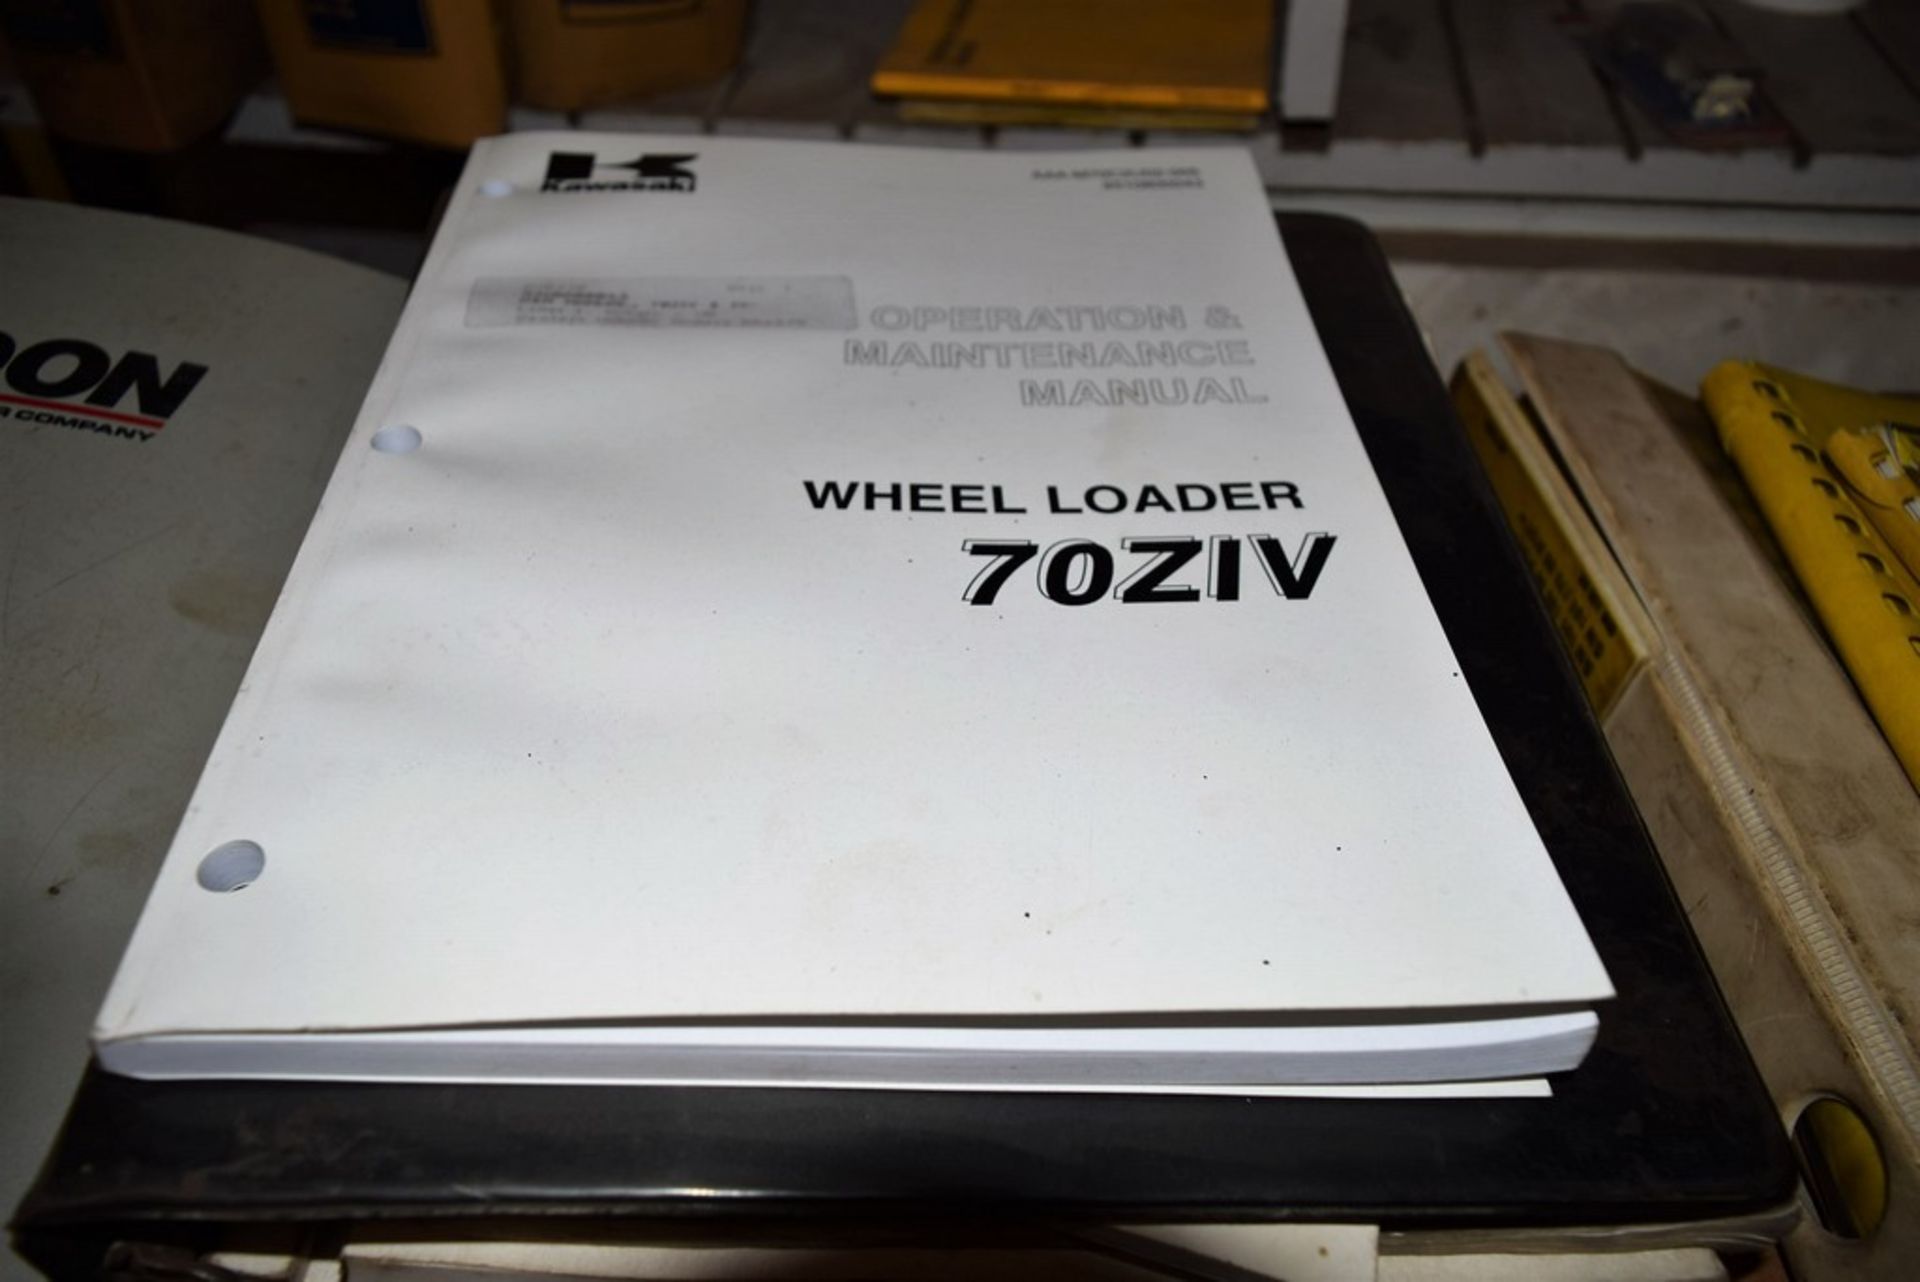 KAWASAKI MODEL 70Z IV WHEEL LOADER S/N 70035856 (2000) Q/C BUCKET, CAB, 23.5R25, 7,406 HOURS SHOWN - Image 7 of 7